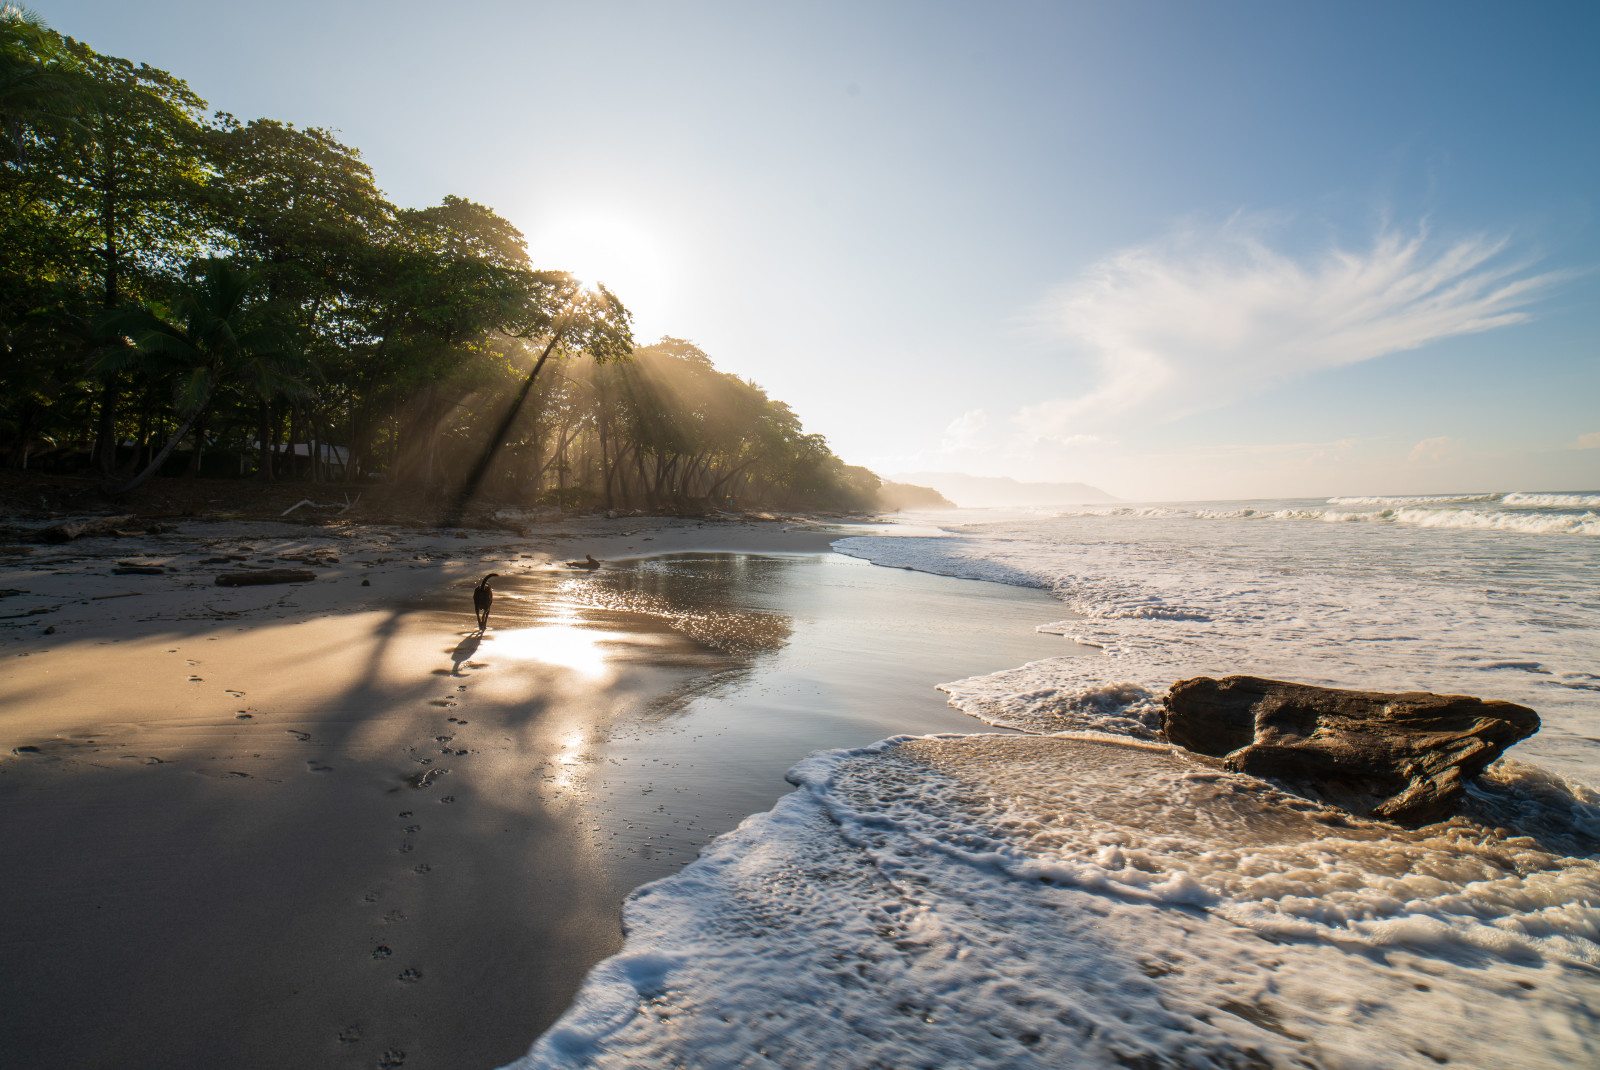 Sunrise on the beach in Santa Teresa, Costa Rica.